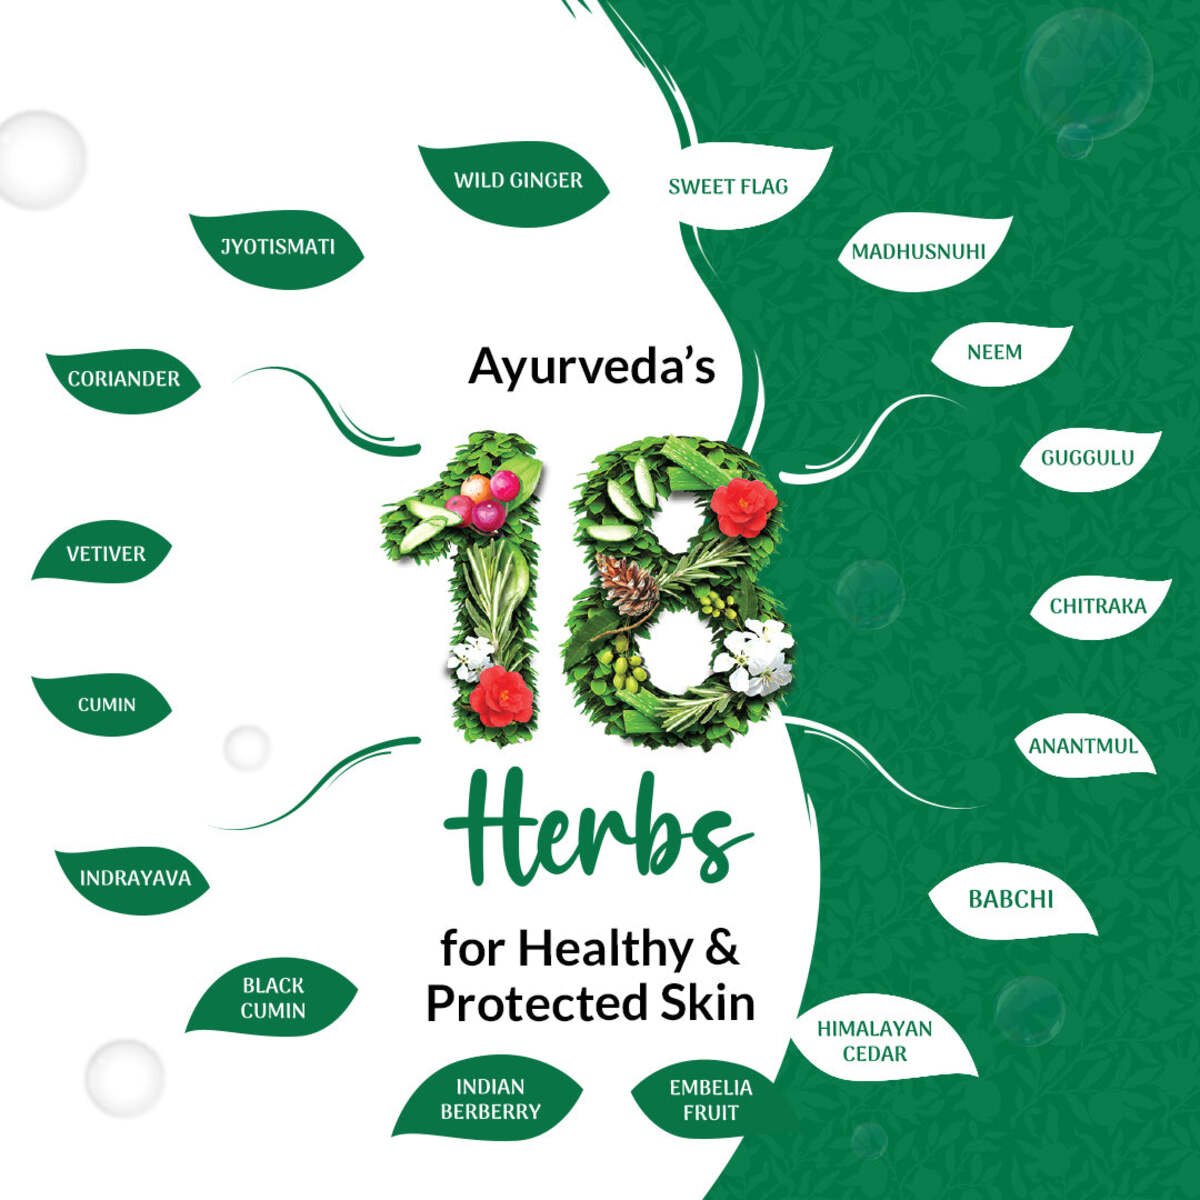 Medimix Ayurvedic Classic 18 Herbs Soap 75 g